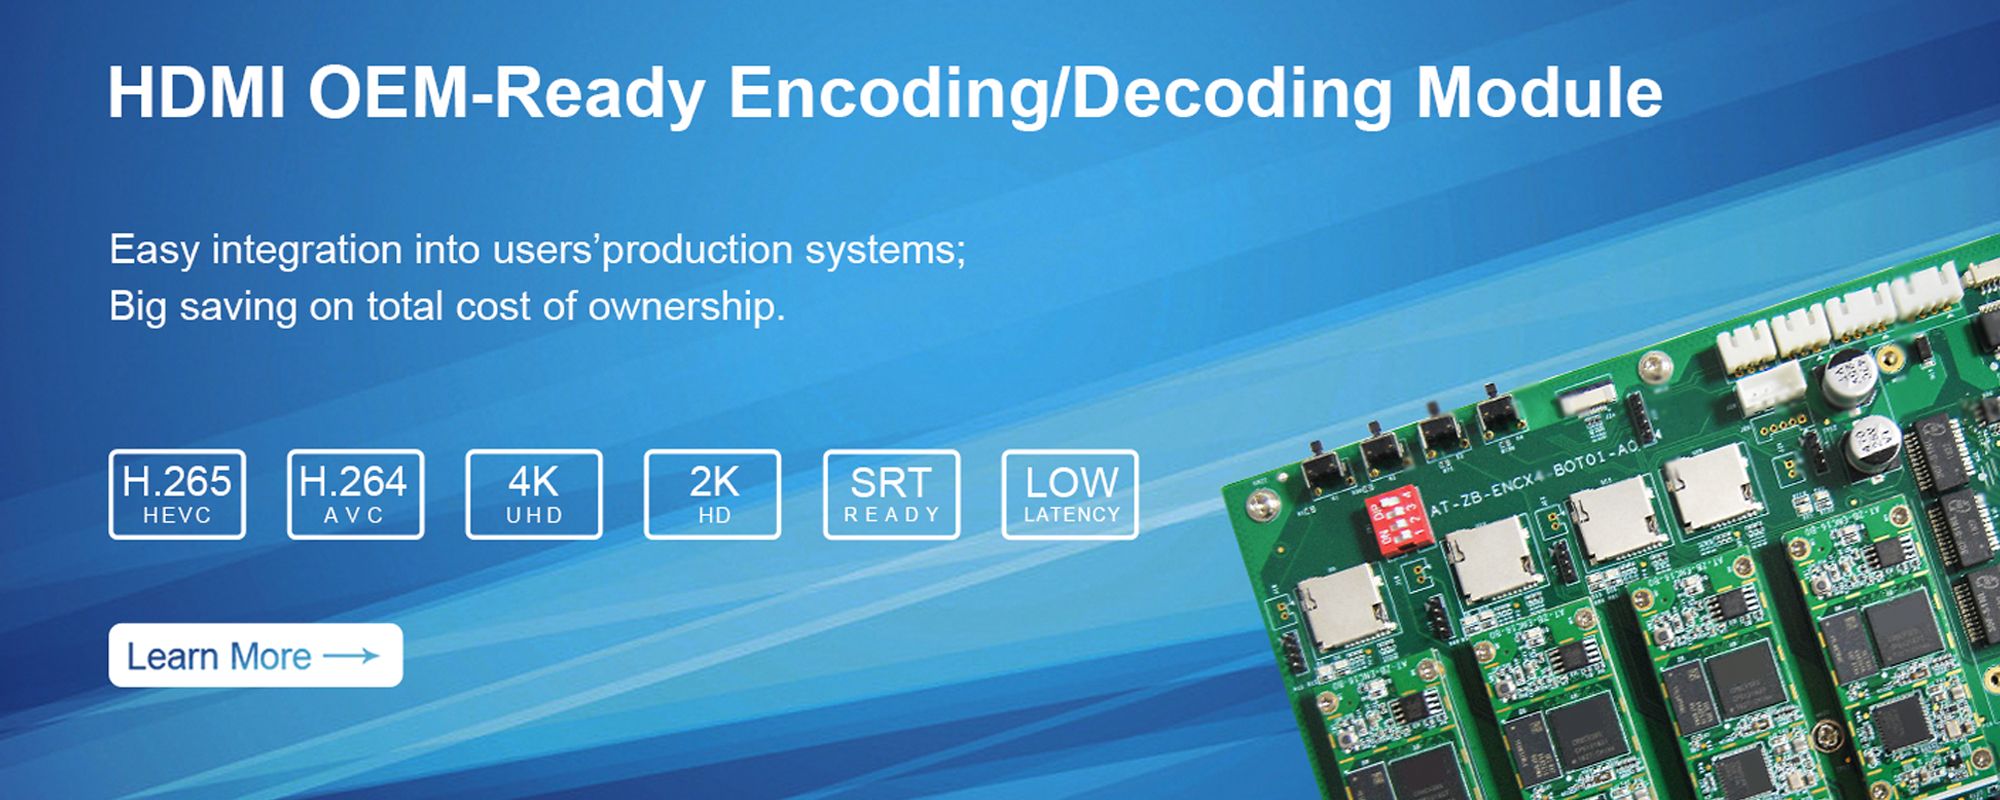 hdmi oem-ready encoding or decoding module